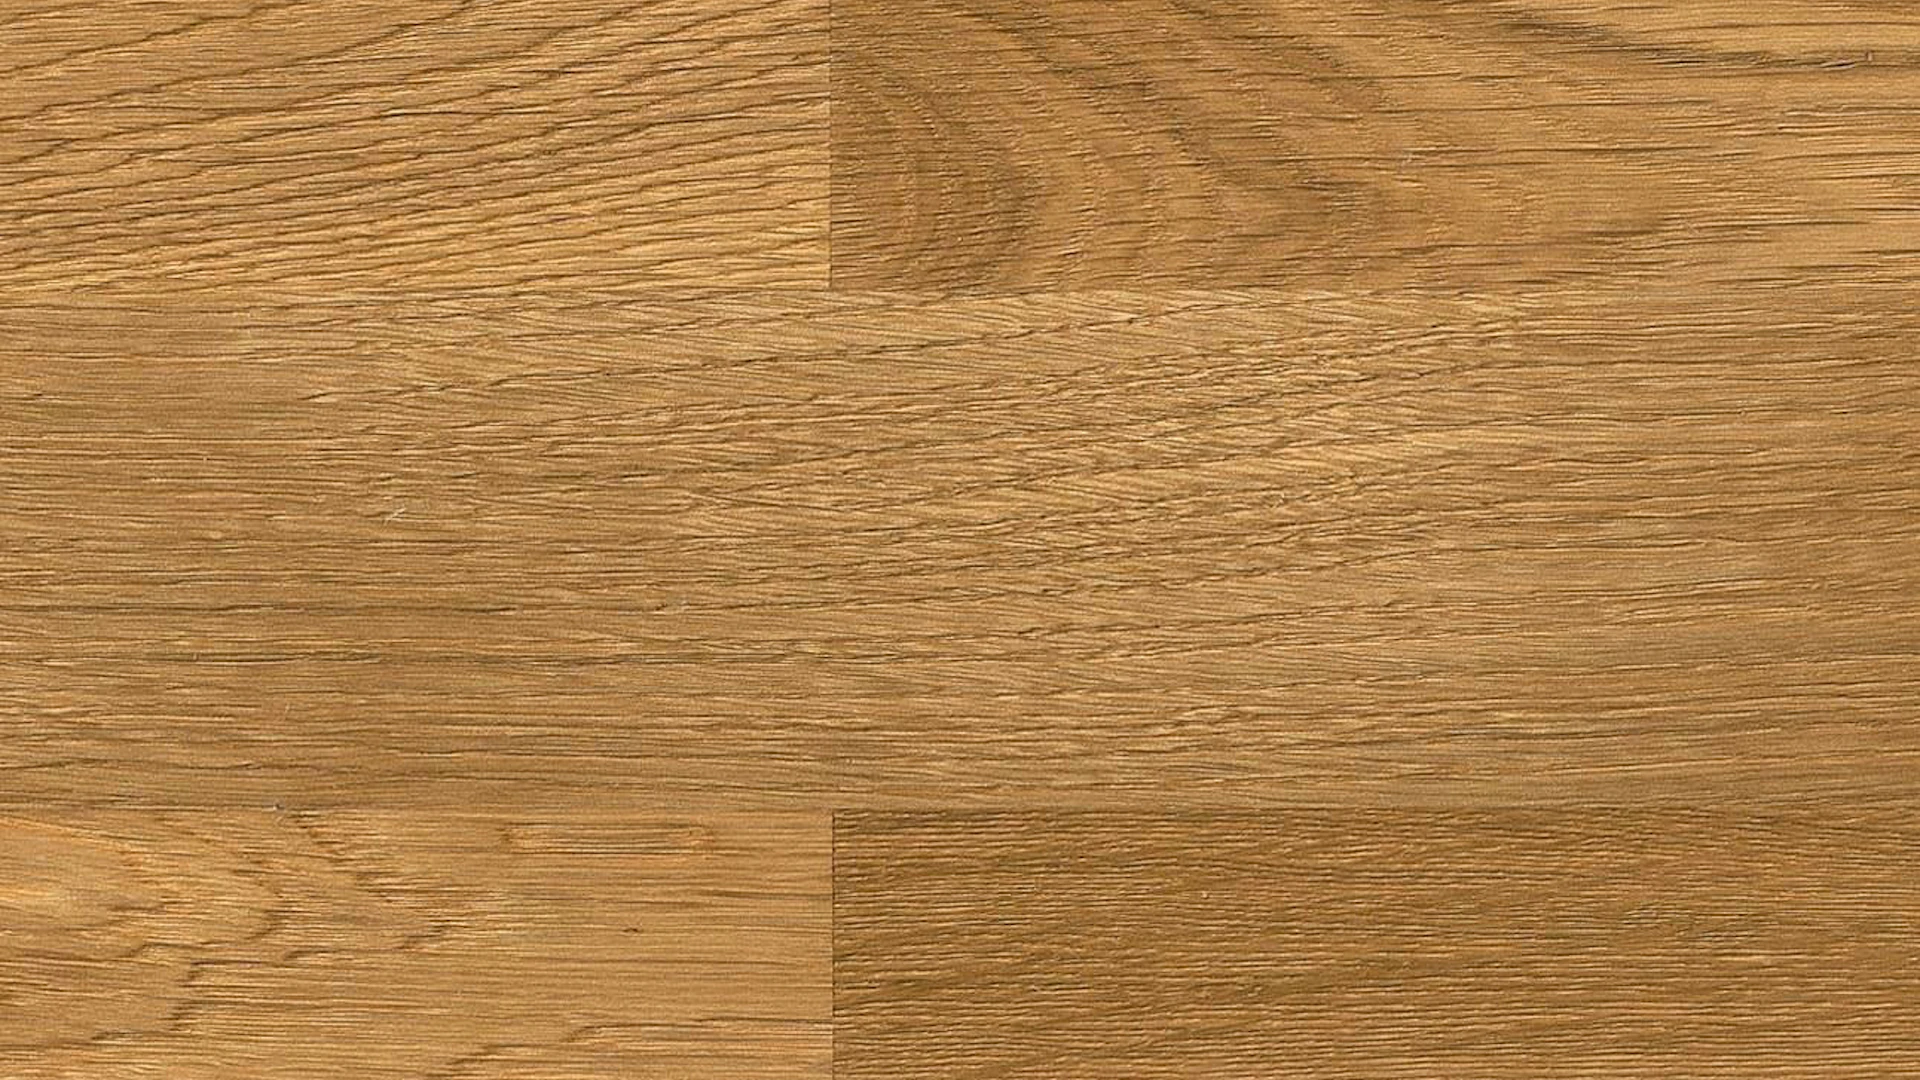 Haro Parquet Flooring - Series 4000 naturaLin plus Oak Trend natural oiled (530135)